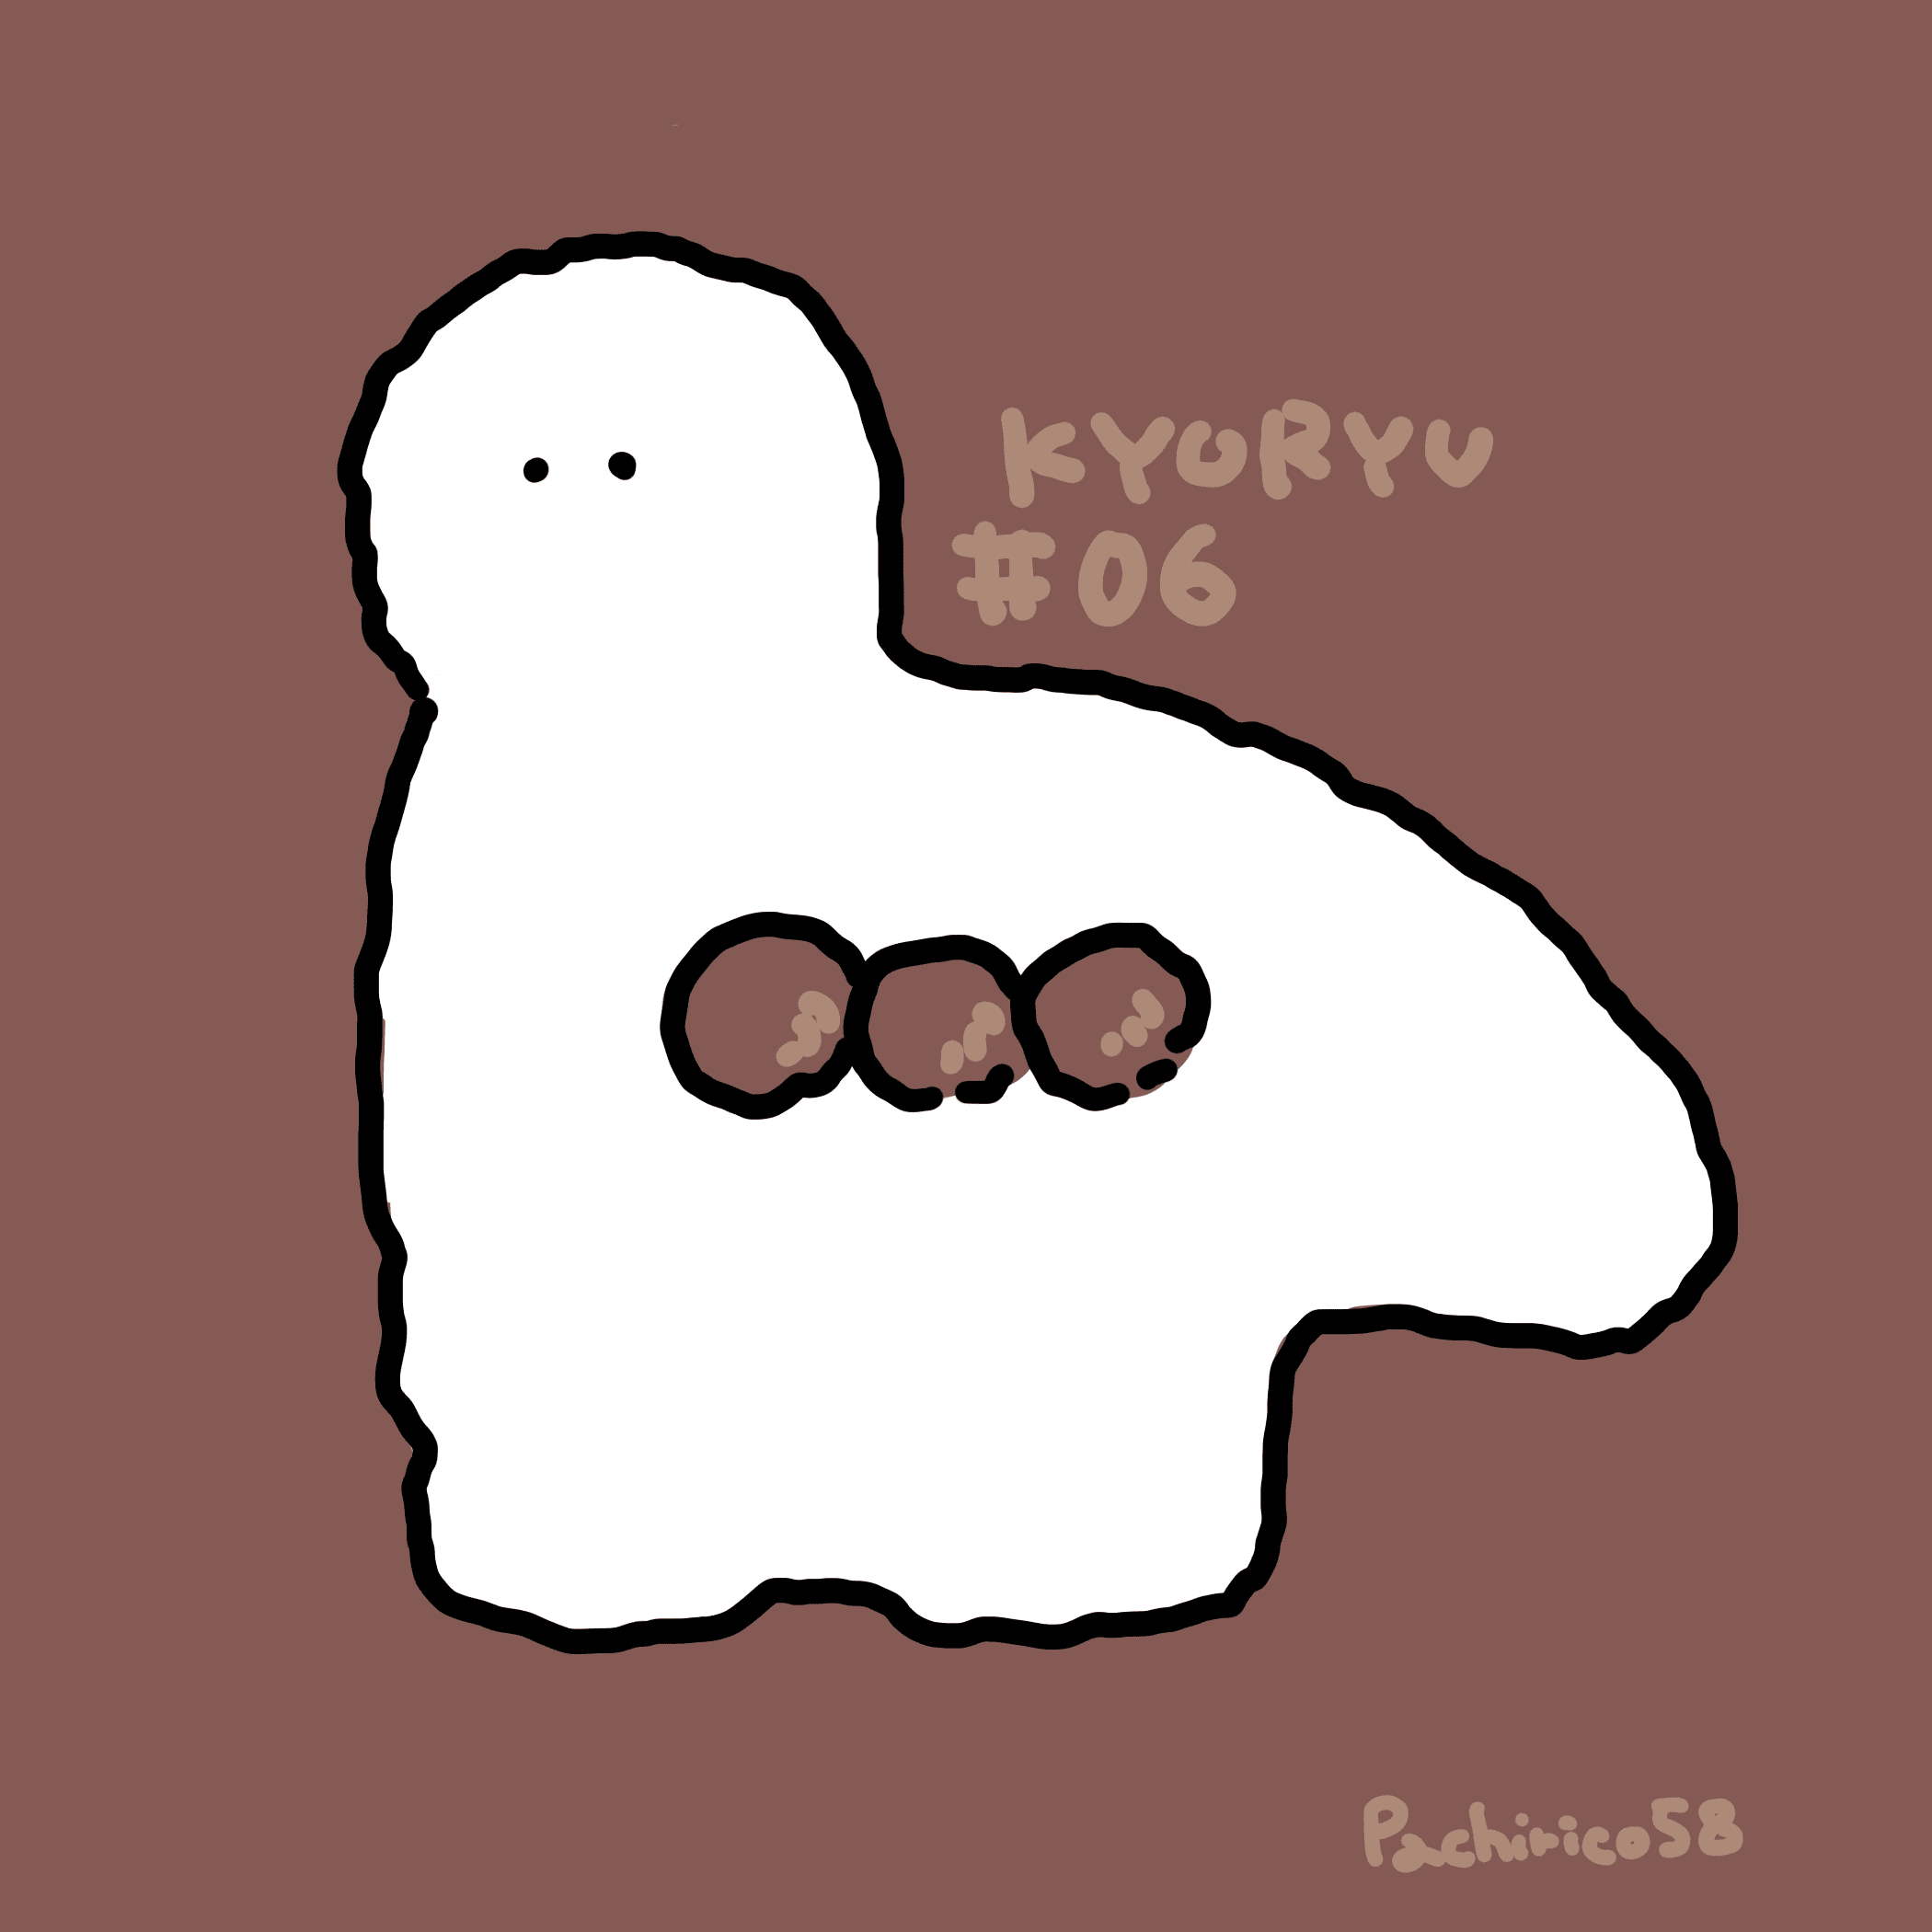 KYORYU#006